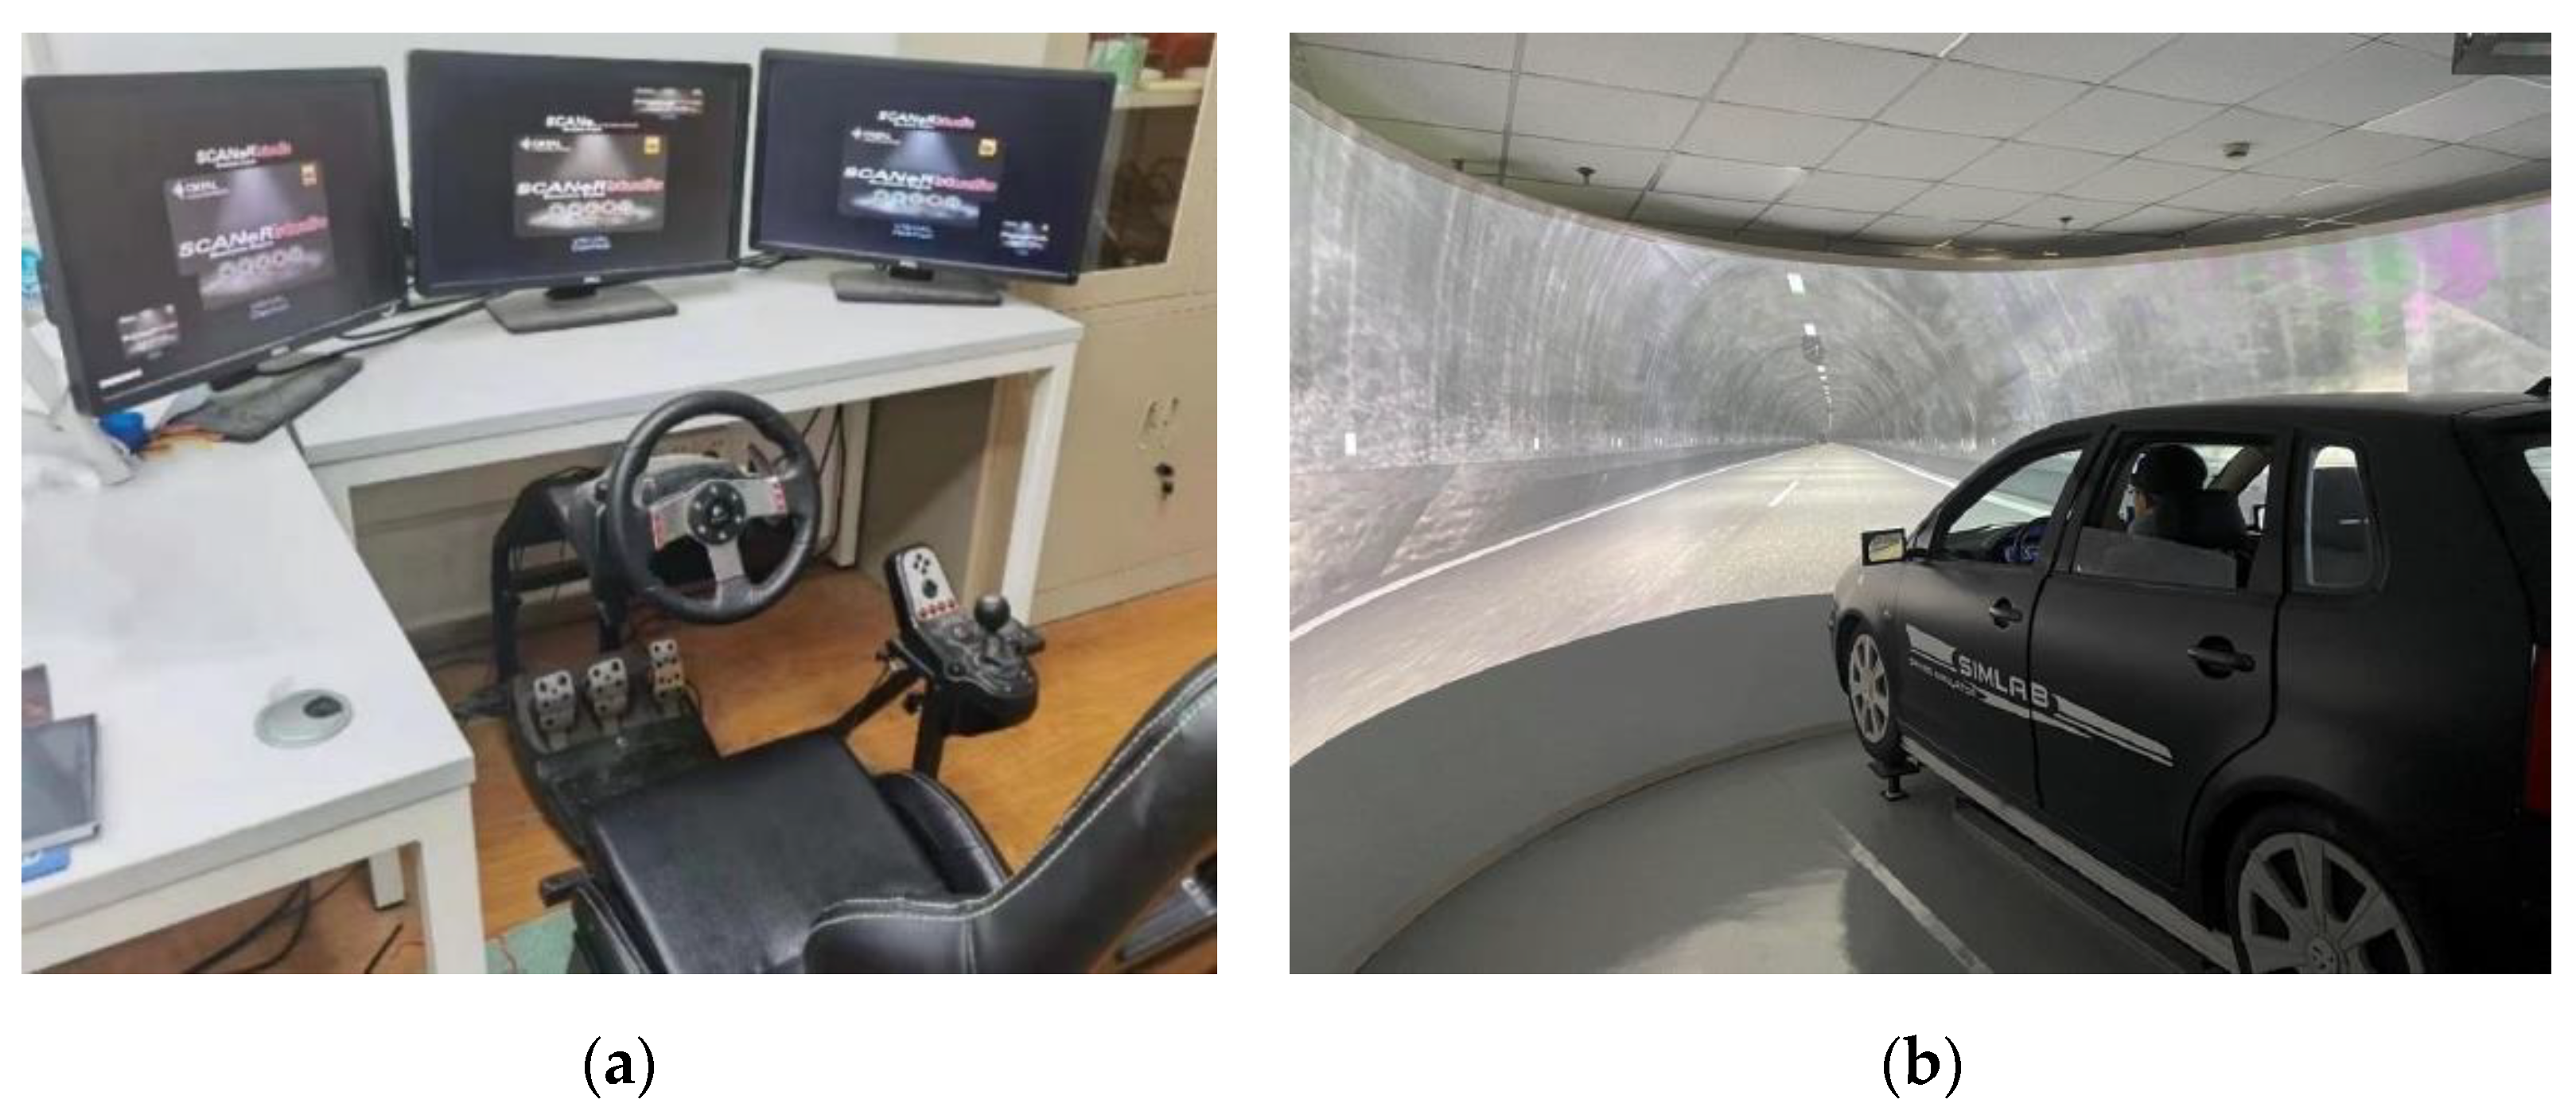 The World's Most Dangerous Driving Simulator - IEEE Spectrum